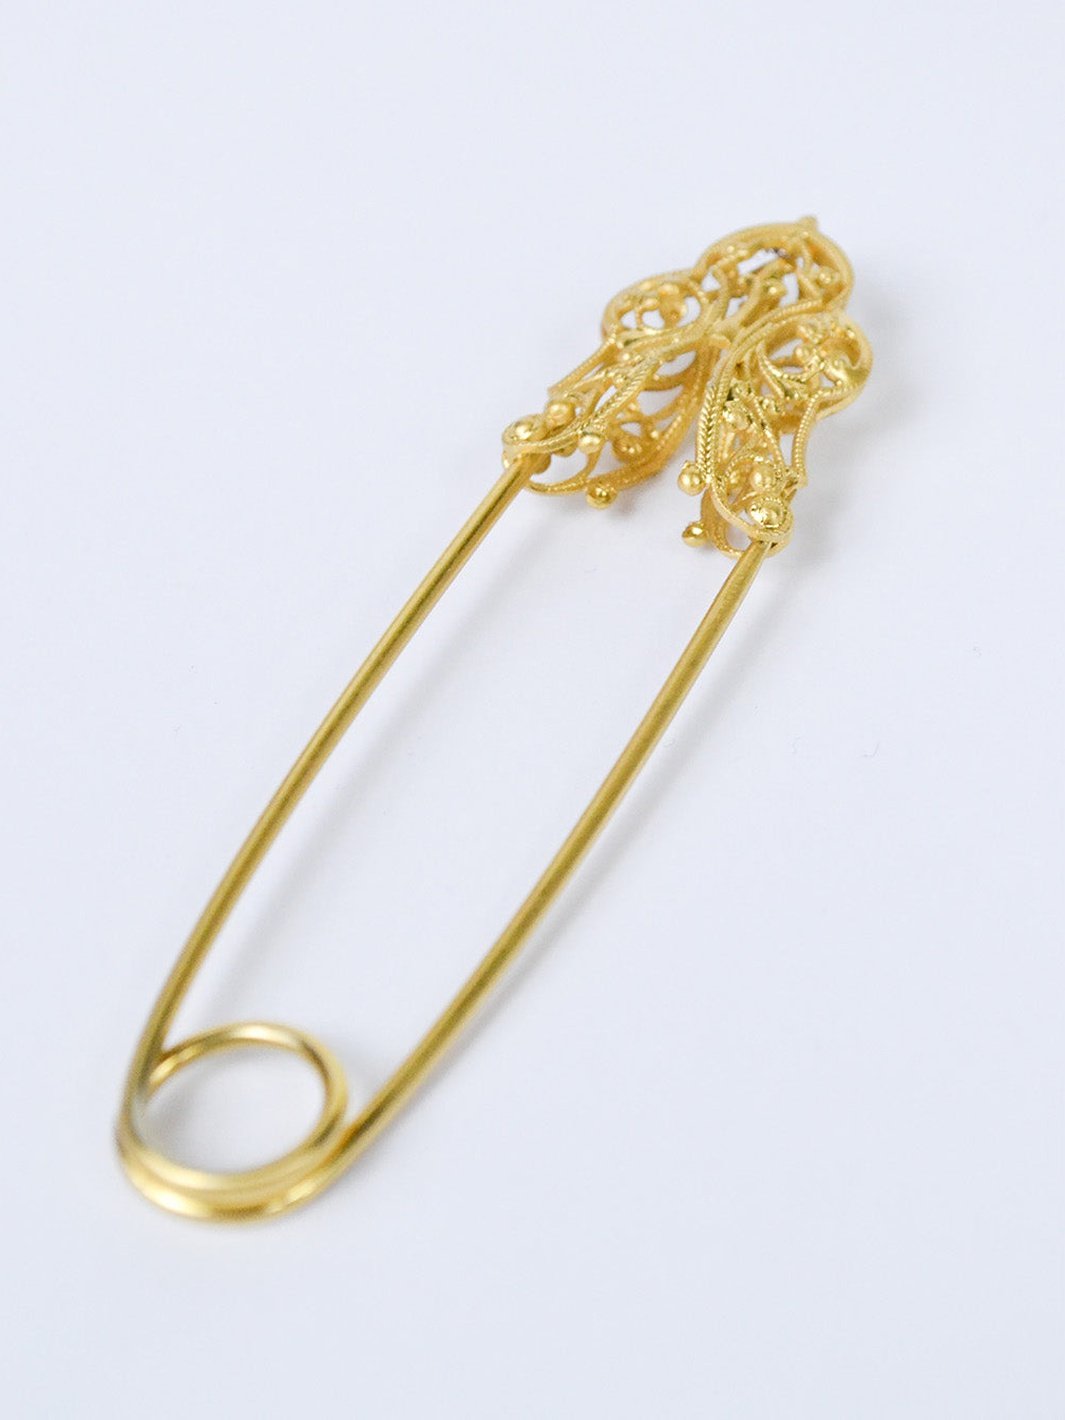 1970s safety pin golden brooch